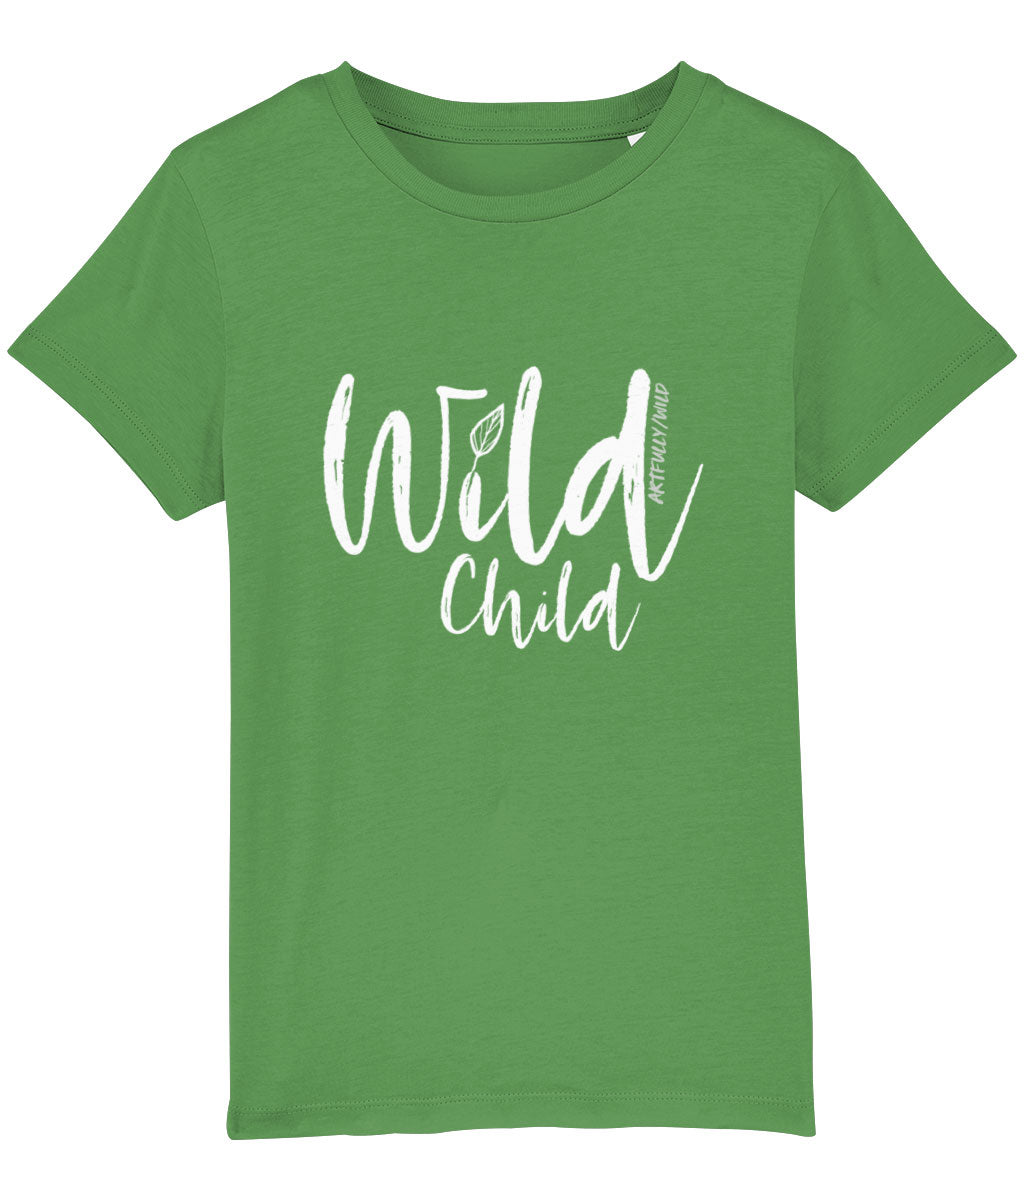 ‘WILD CHILD’ Kids Organic Green T-Shirt for Boys & Girls. White slogan print with water-based inks. Original Design by Artfully Wild.